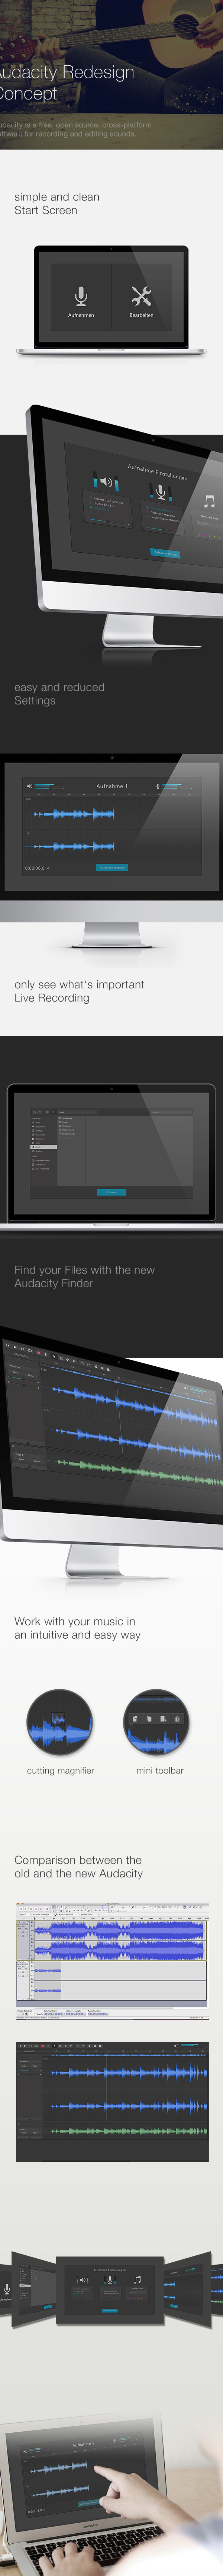 Audacity Editing  record software studio Music Editing designer julian dorn black redesign haptic icons step Guide